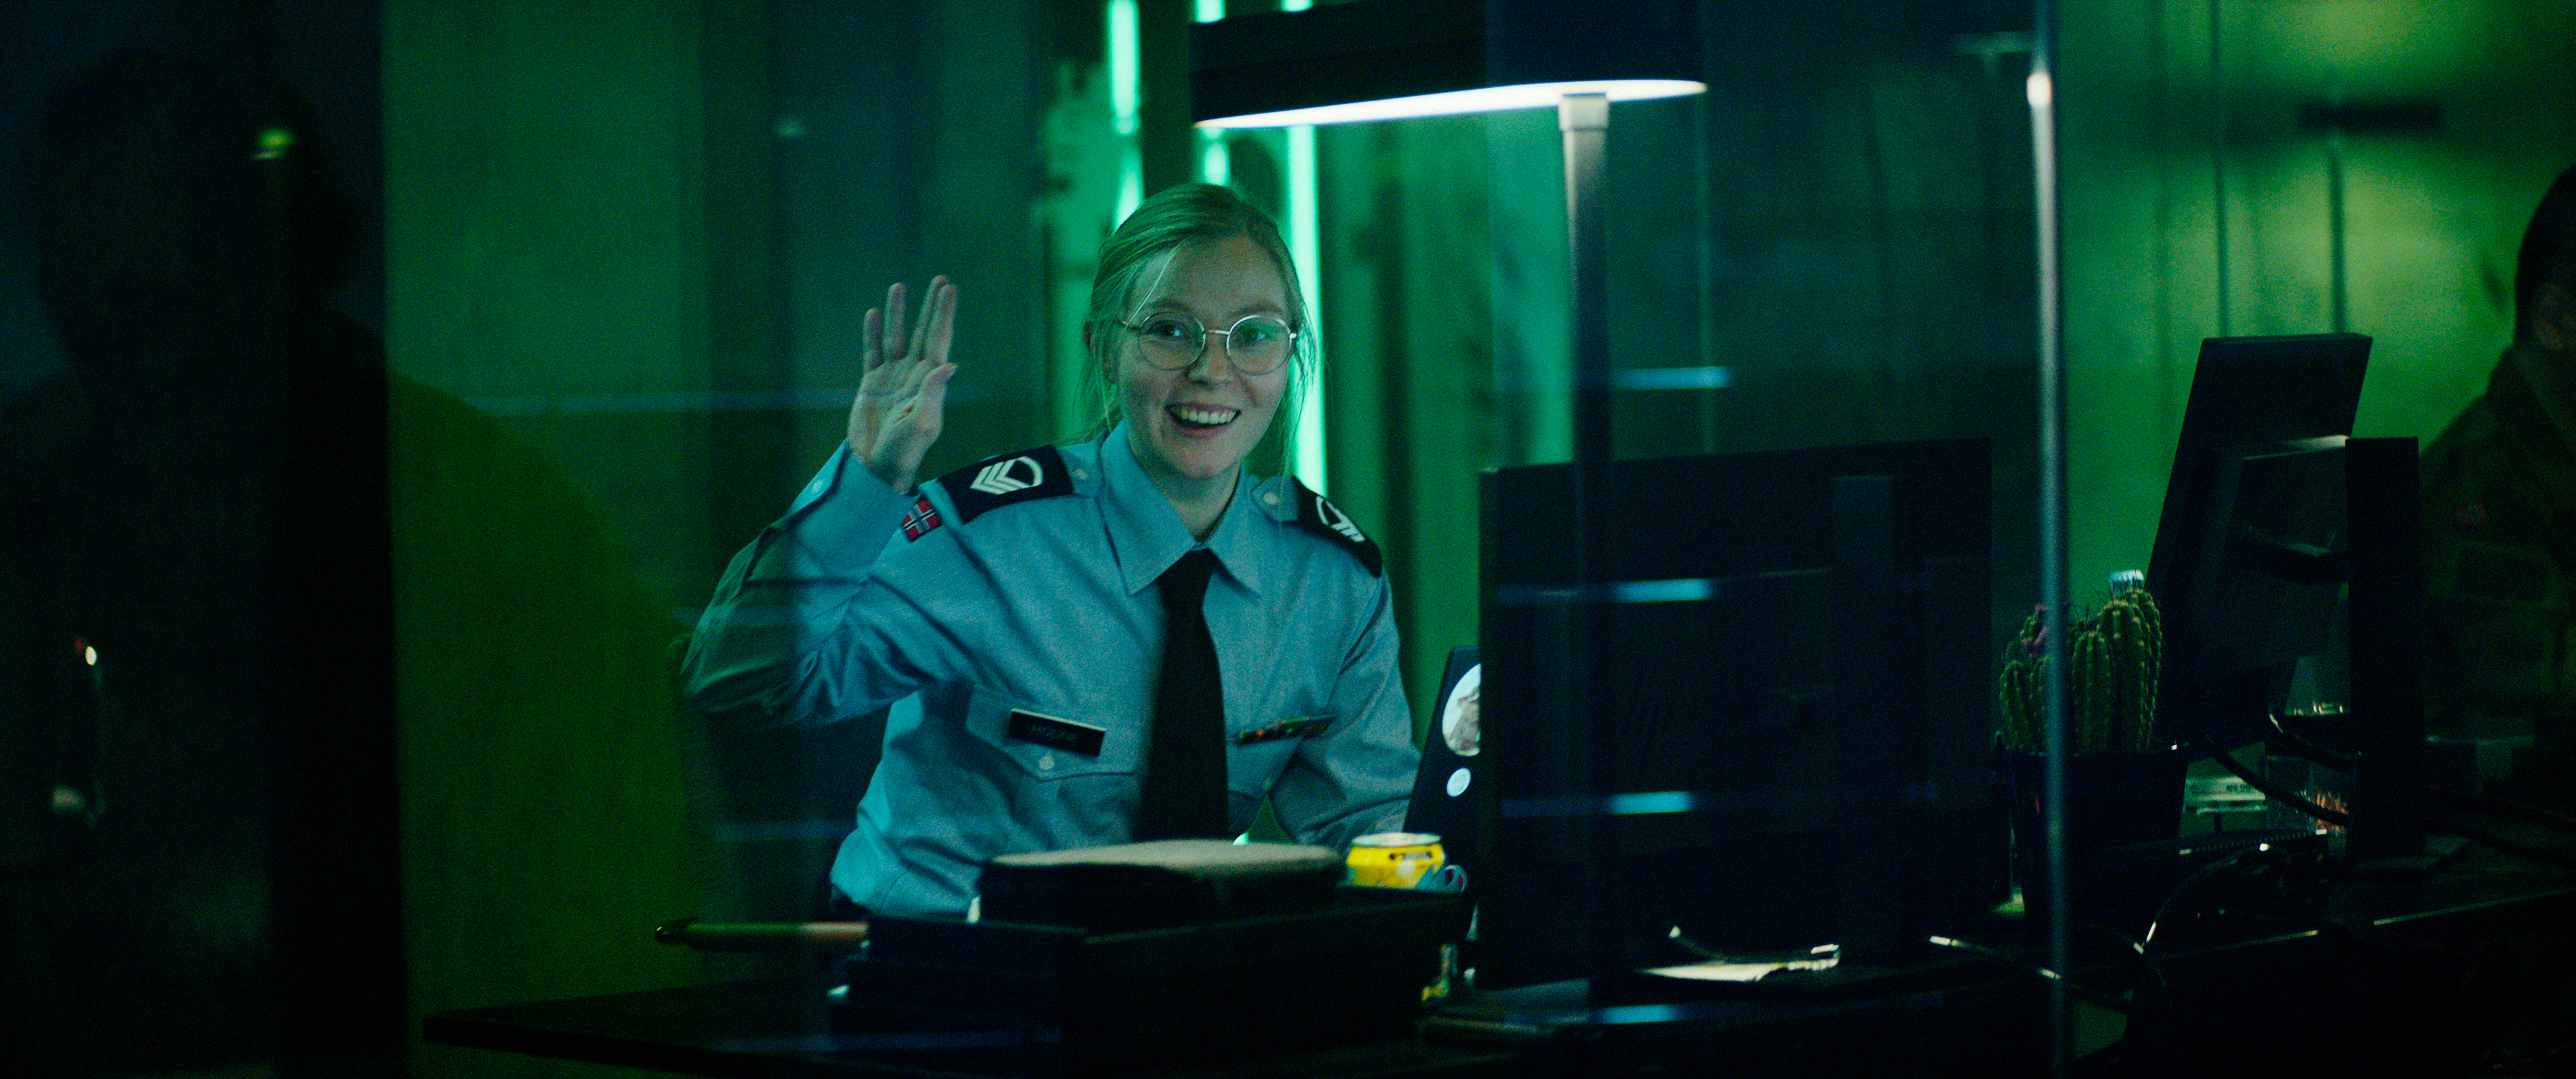 Karoline Viktoria Sletteng Garvang as Sigrid in ‘Troll’. Image: Jallo Faber / courtesy of Netflix